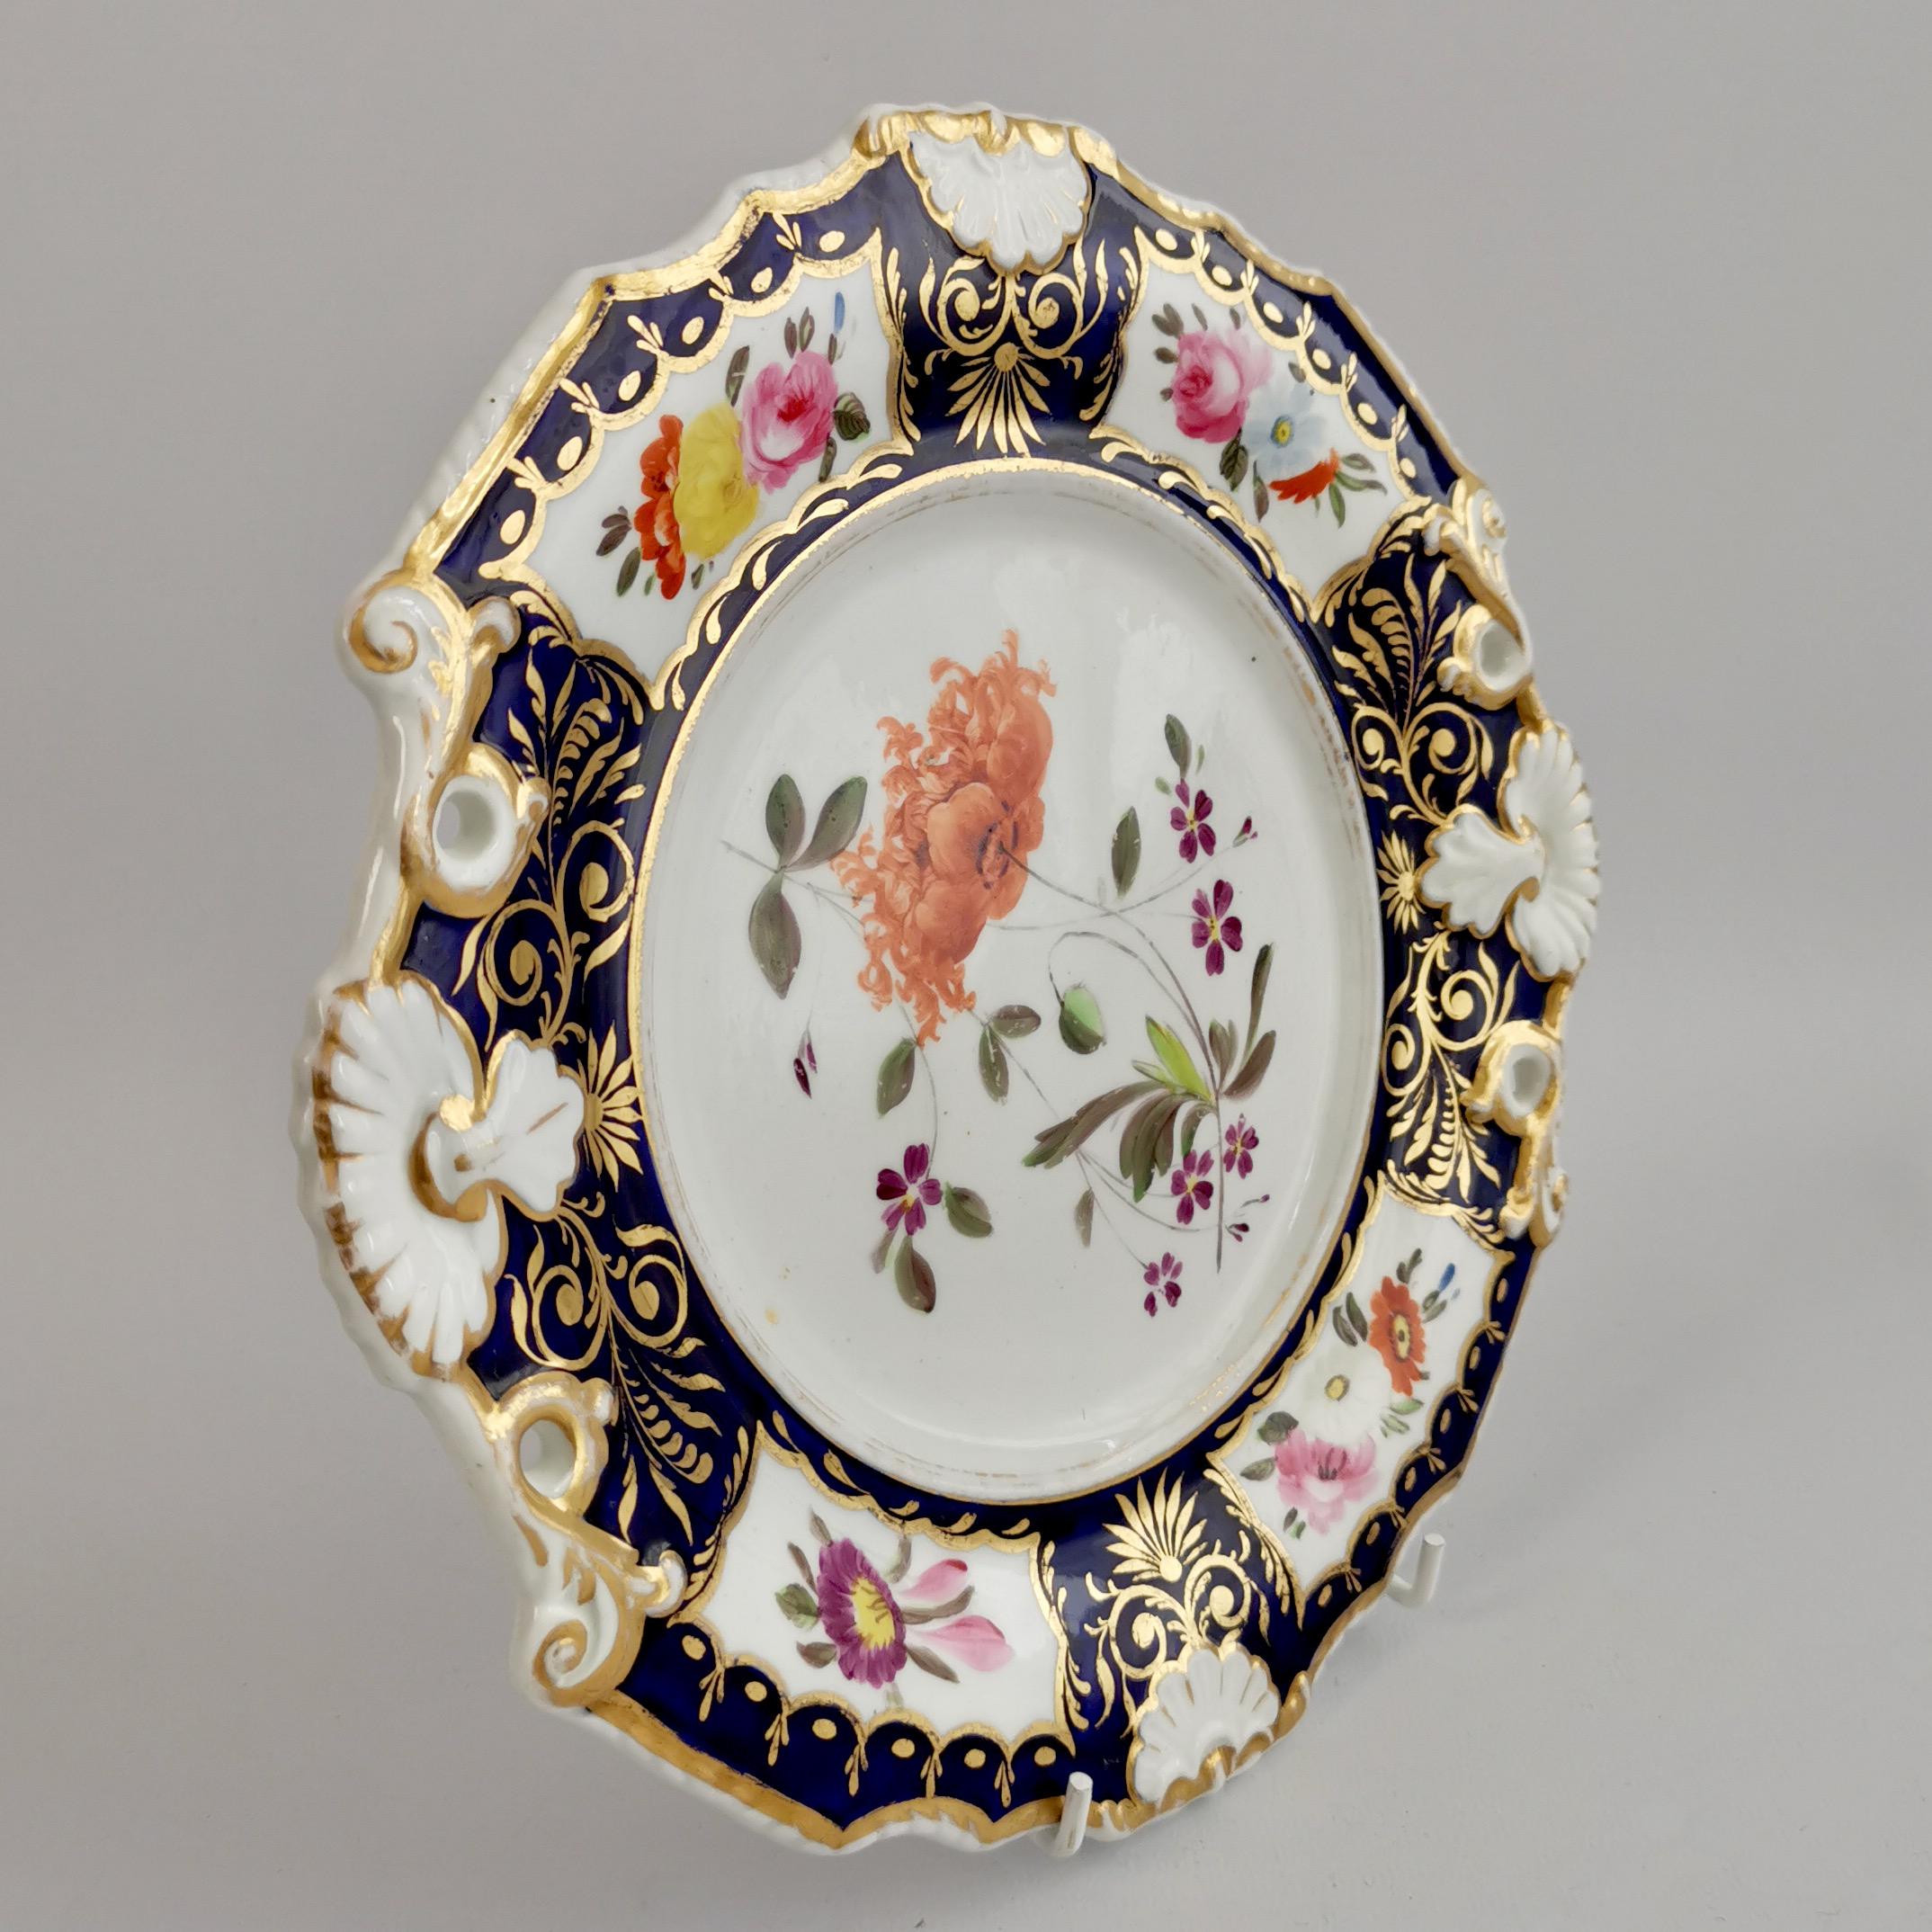 New Hall Porcelain Part Dessert Service, Cobalt Blue, Flowers, Regency 1824-1830 11